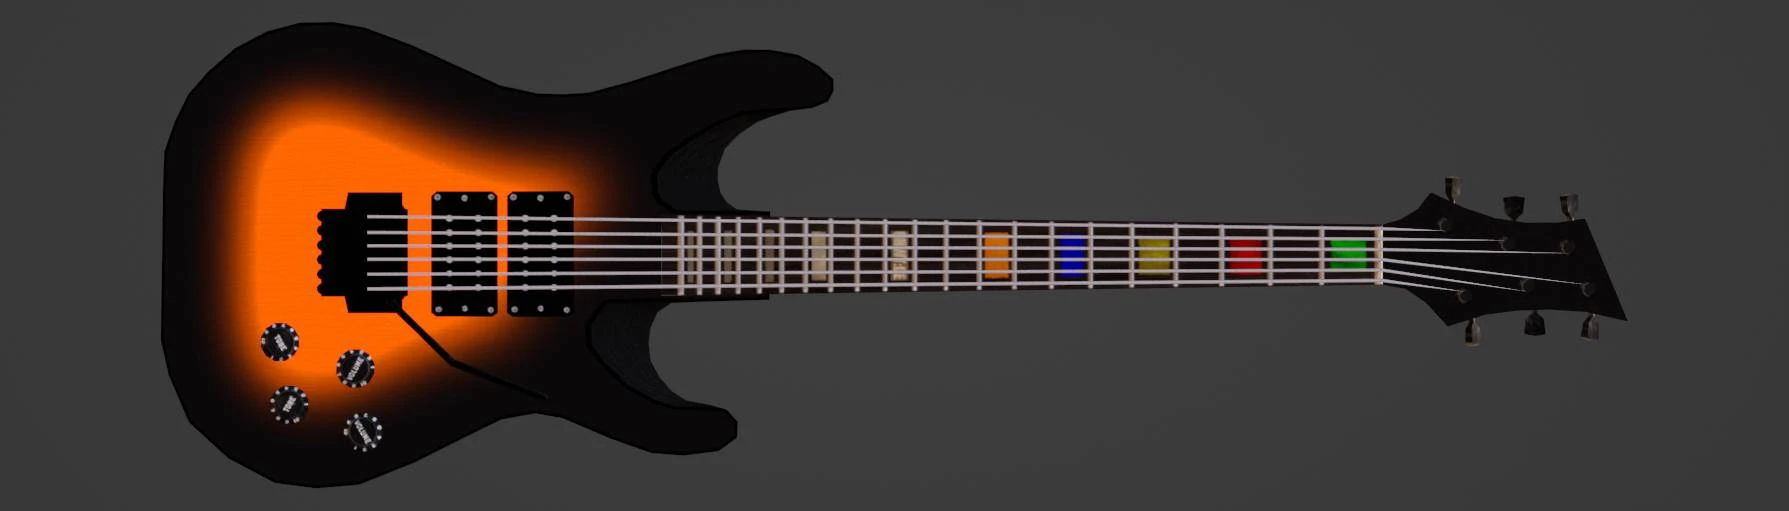 Genericaster Tribute Guitar At Guitar Hero World Tour Nexus Mods And Community